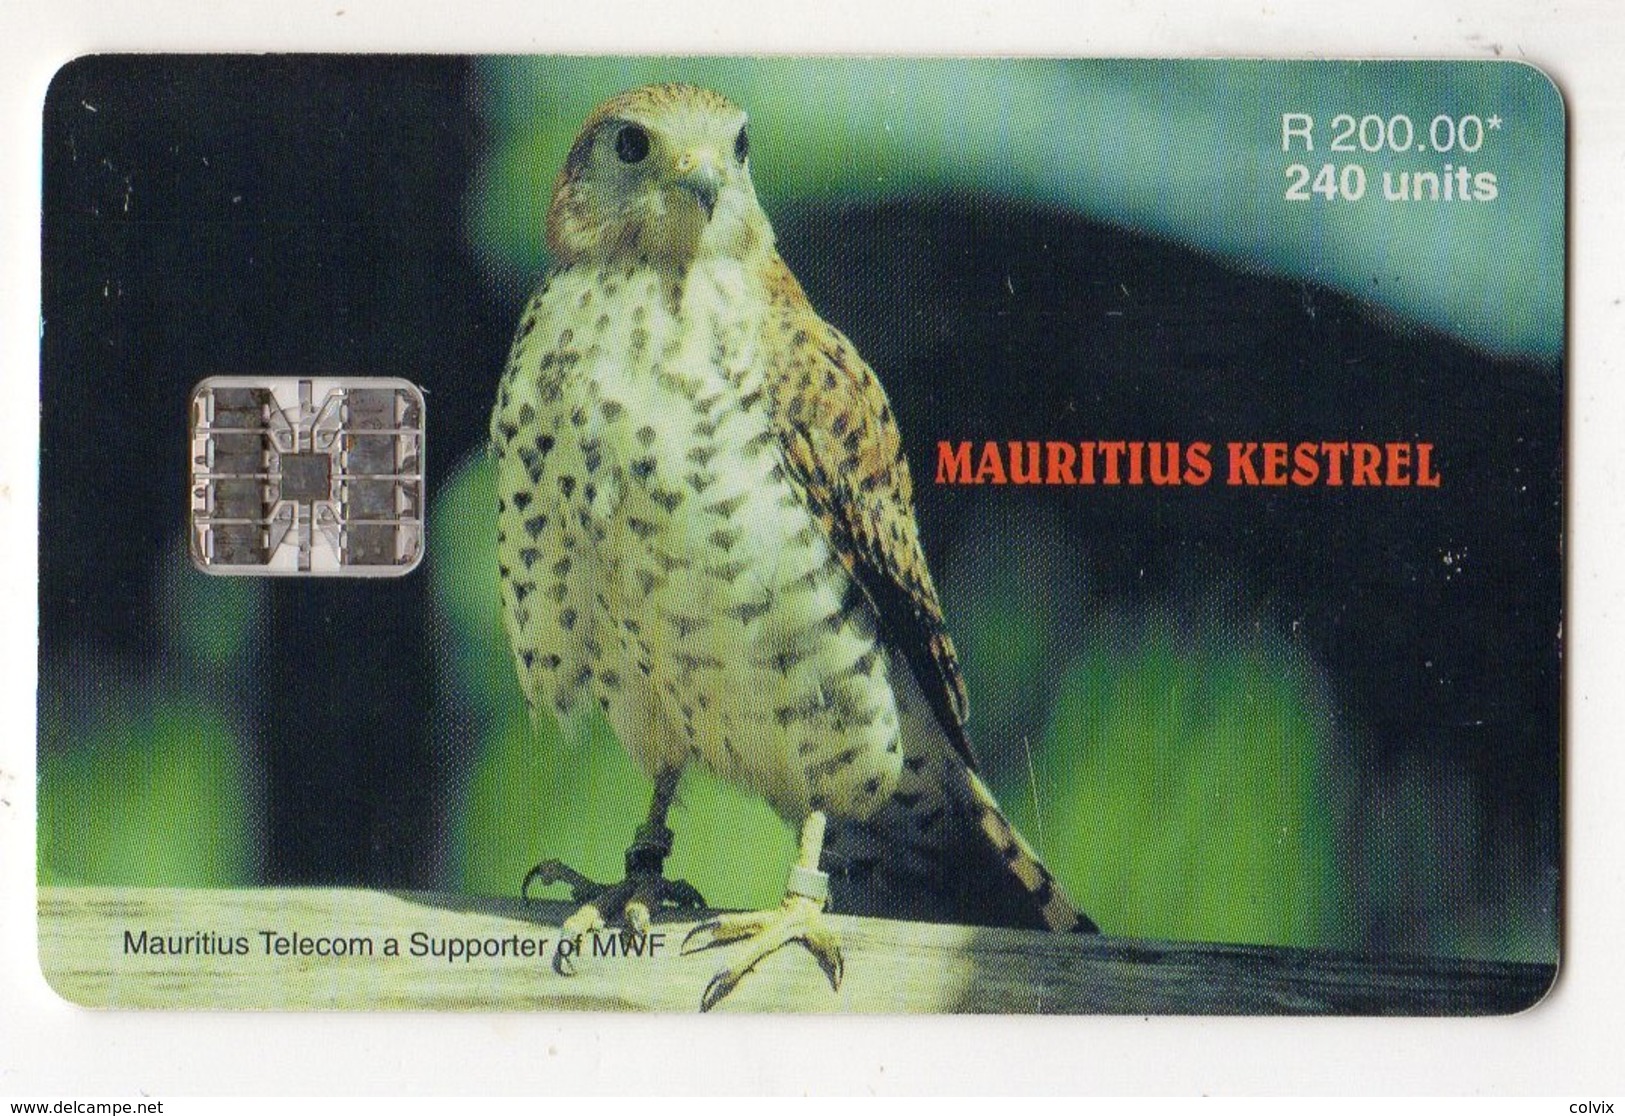 MAURICE Ref MV Cards MAU-41  240 U MAURITIUS KESTREL Date 2000 - Mauricio